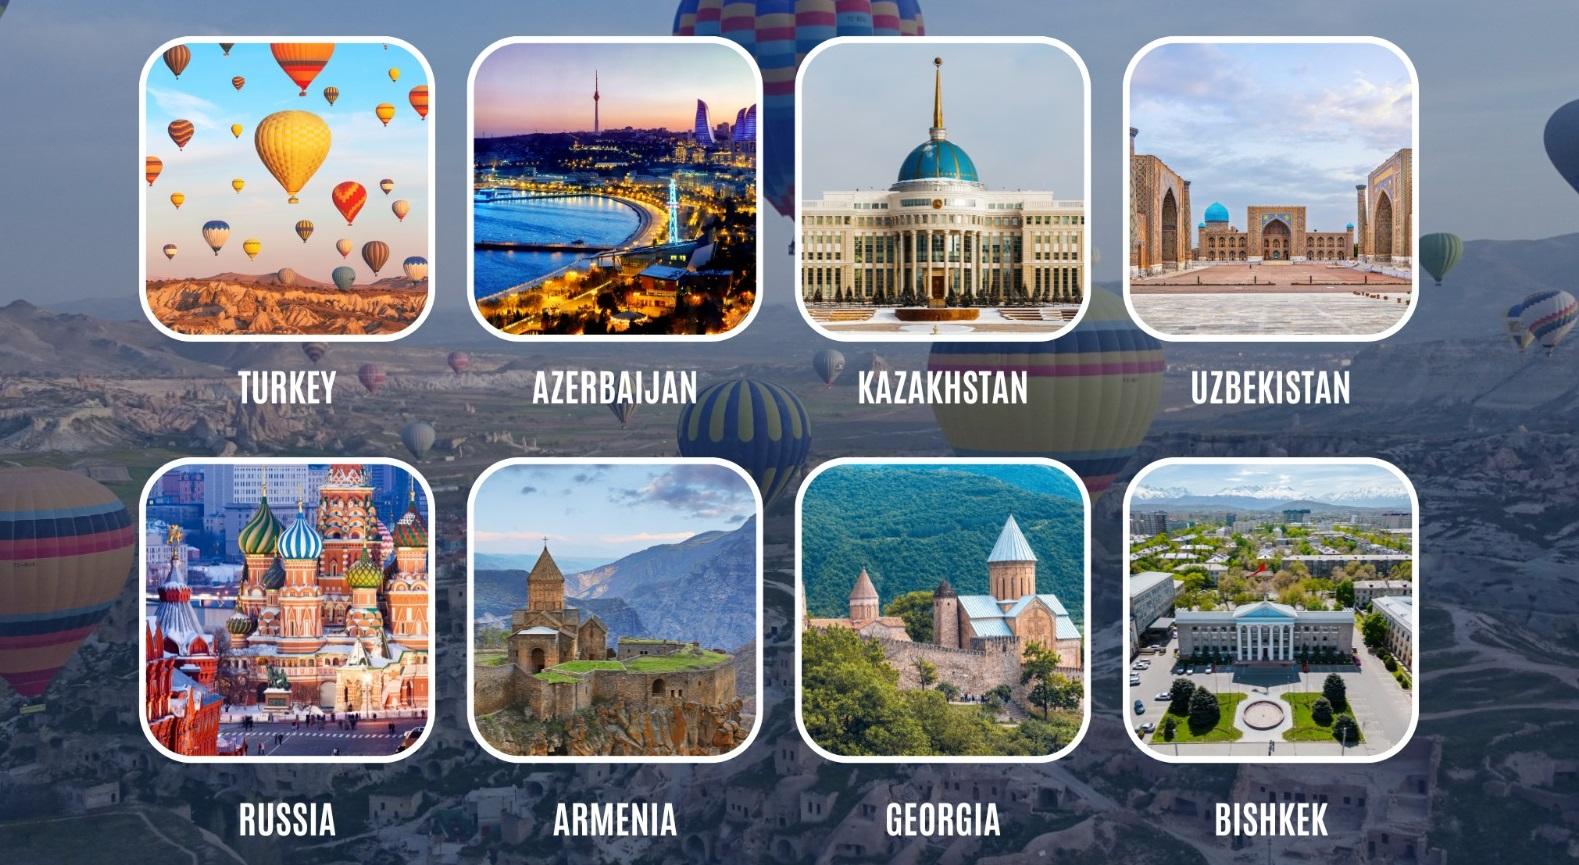 Uzbekistan Tour Packages From Bangalore